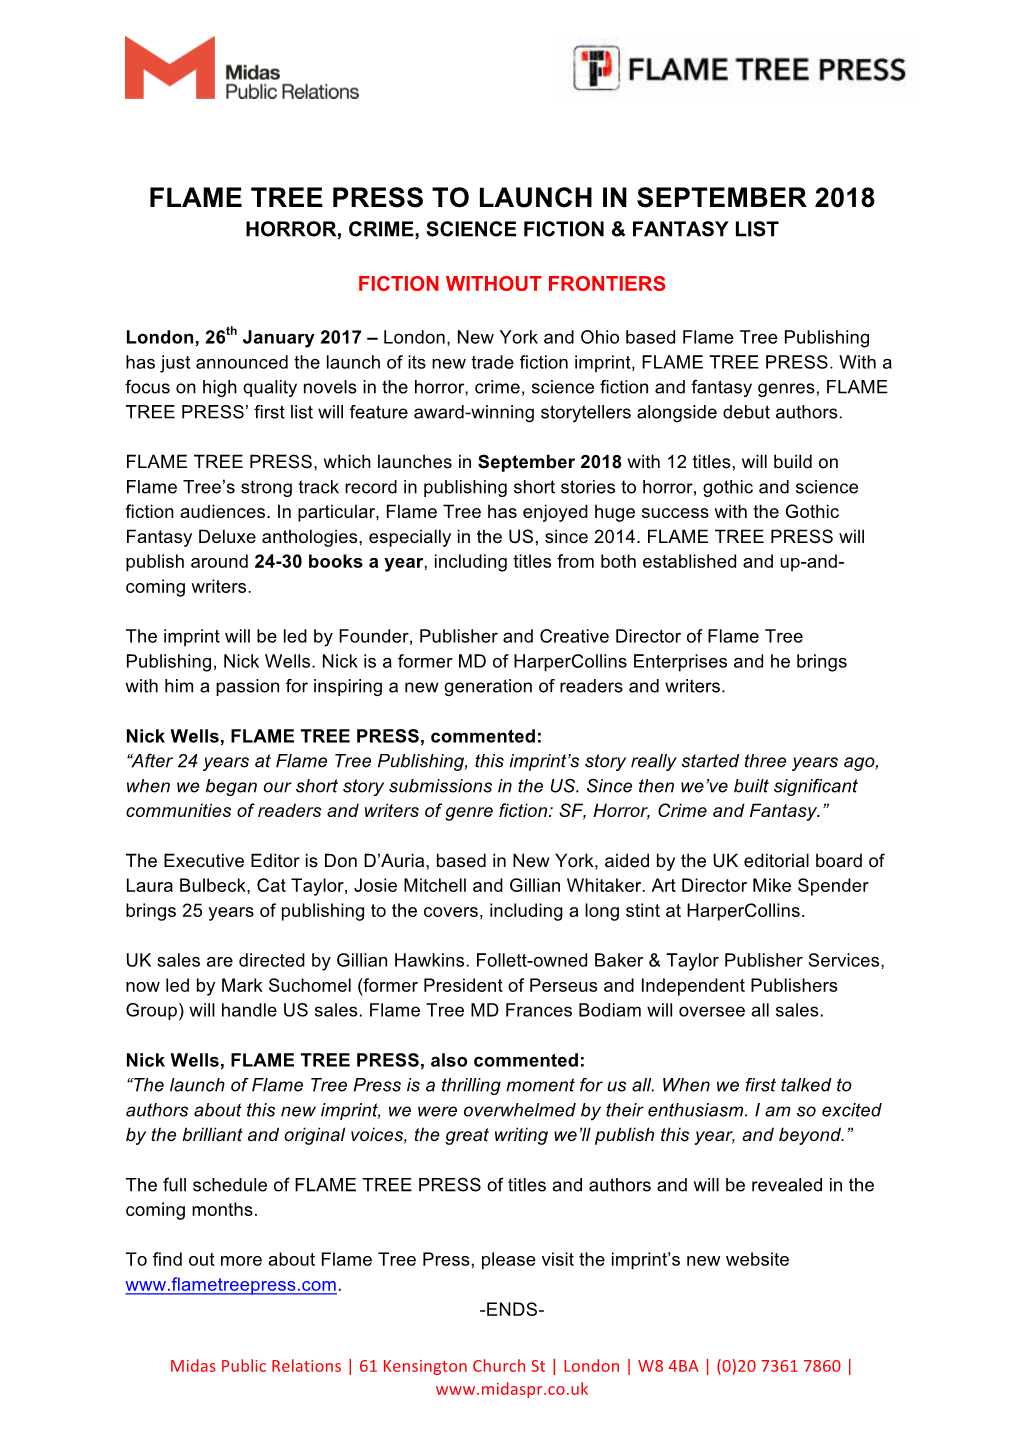 Flame Tree Press Launch Press Release FINAL